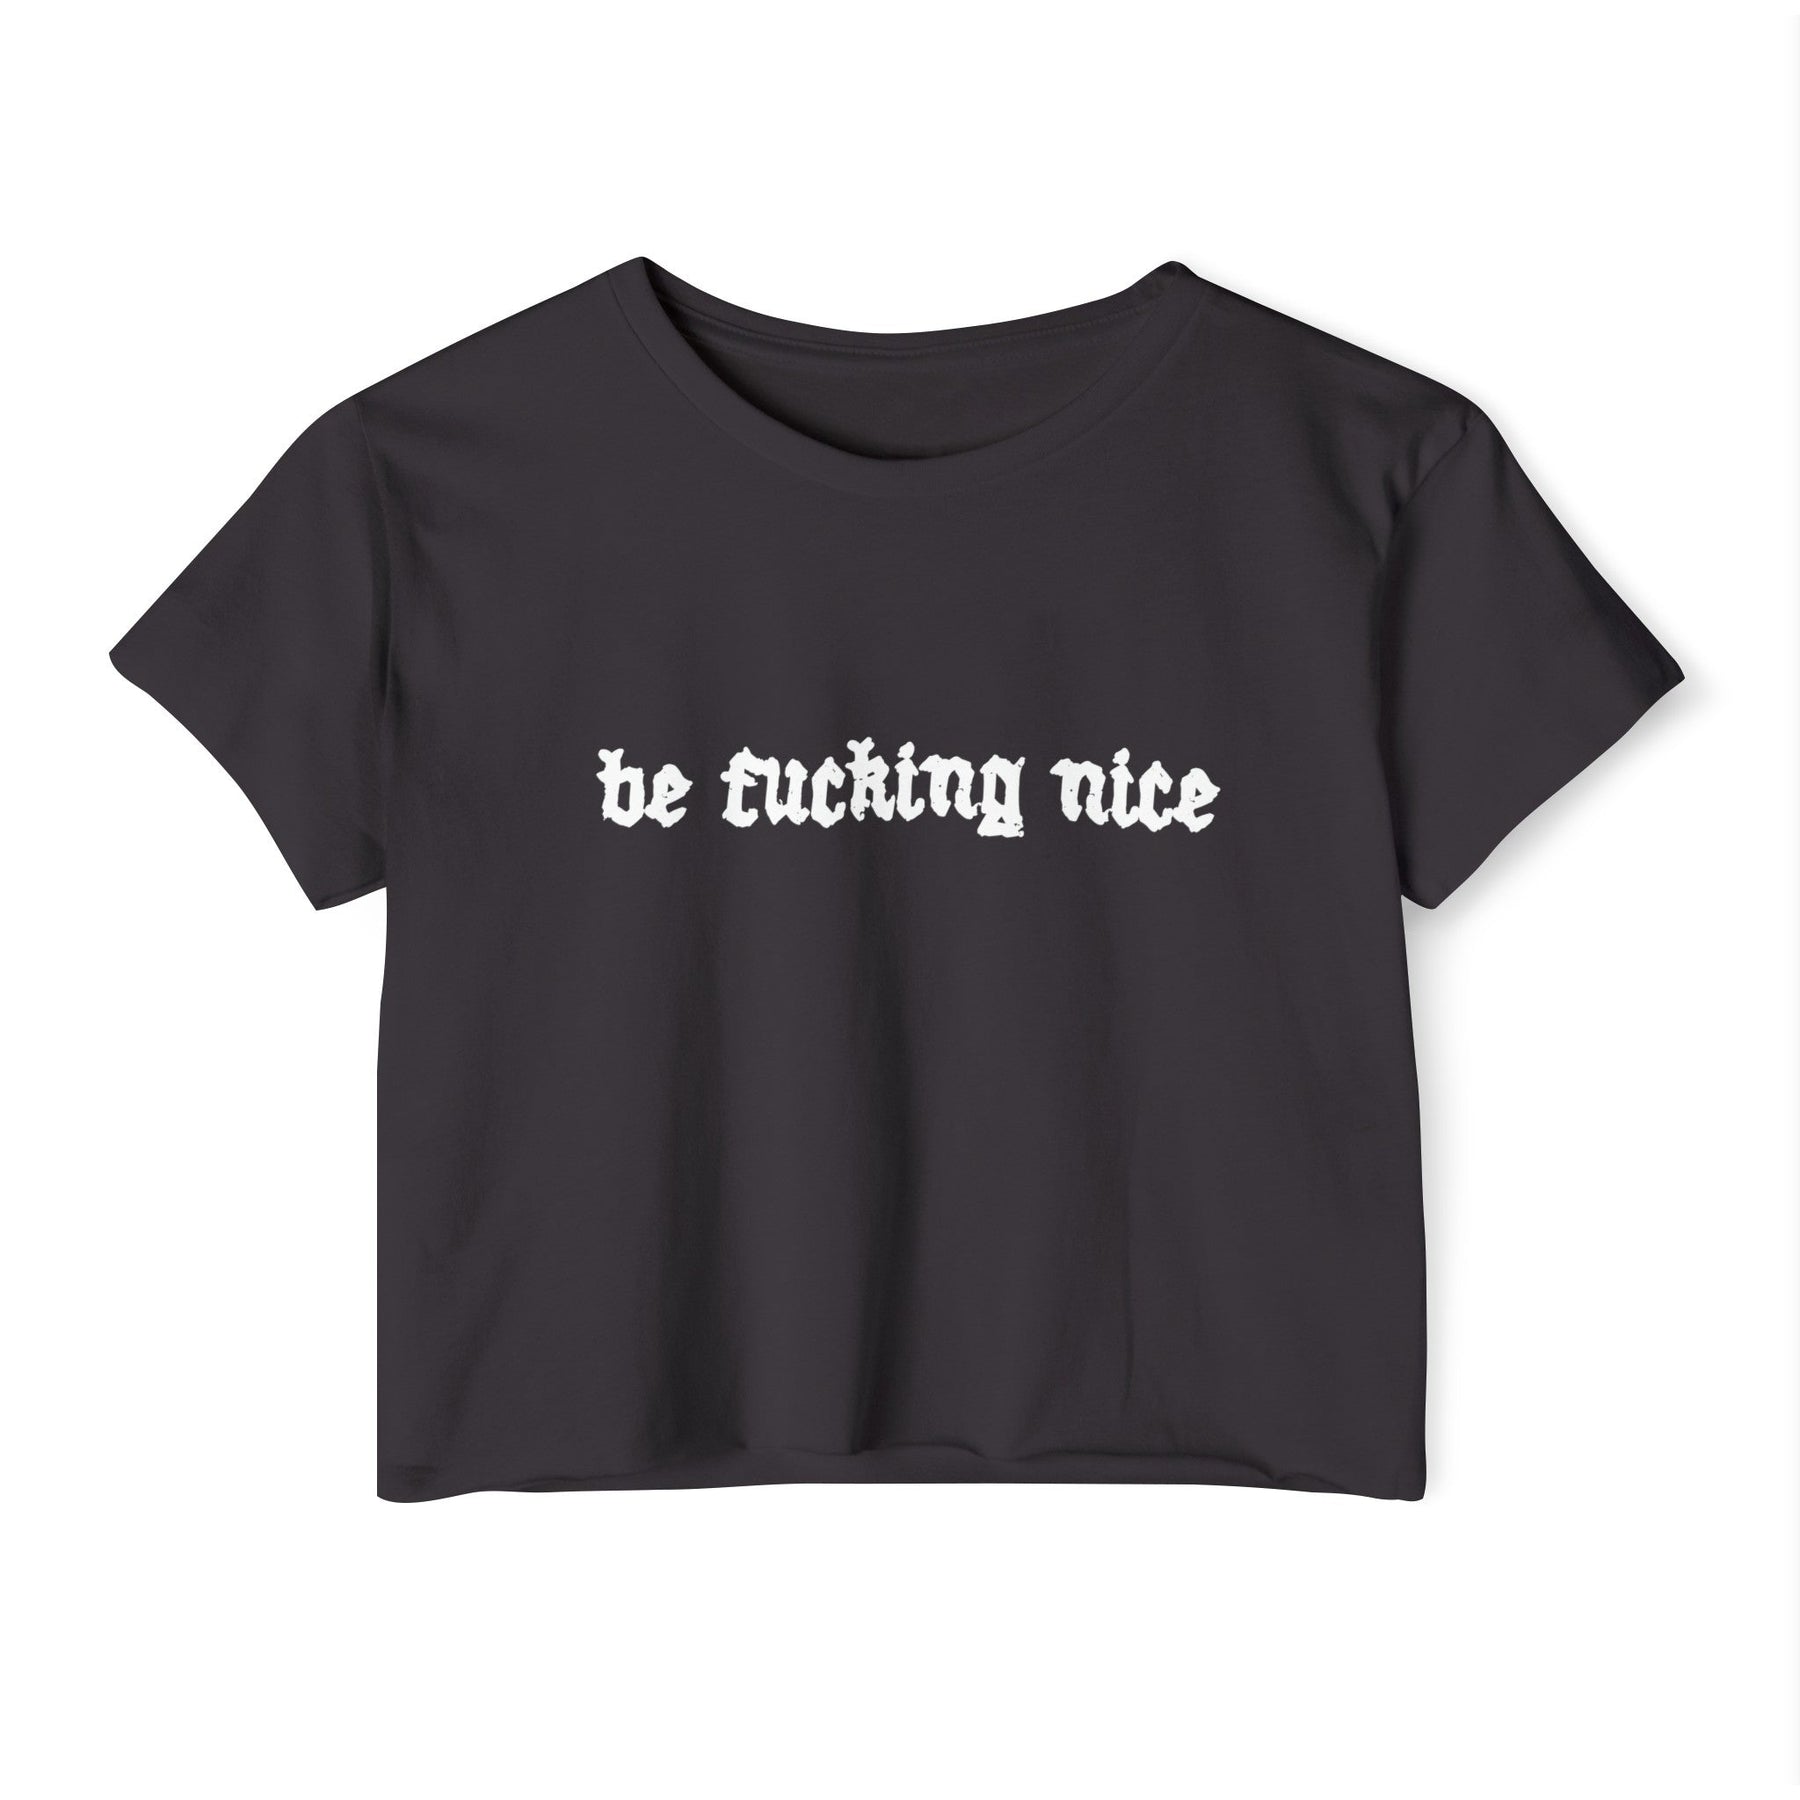 Be Fucking Nice Women's Lightweight Crop Top - Goth Cloth Co.T - Shirt32110282285447293116